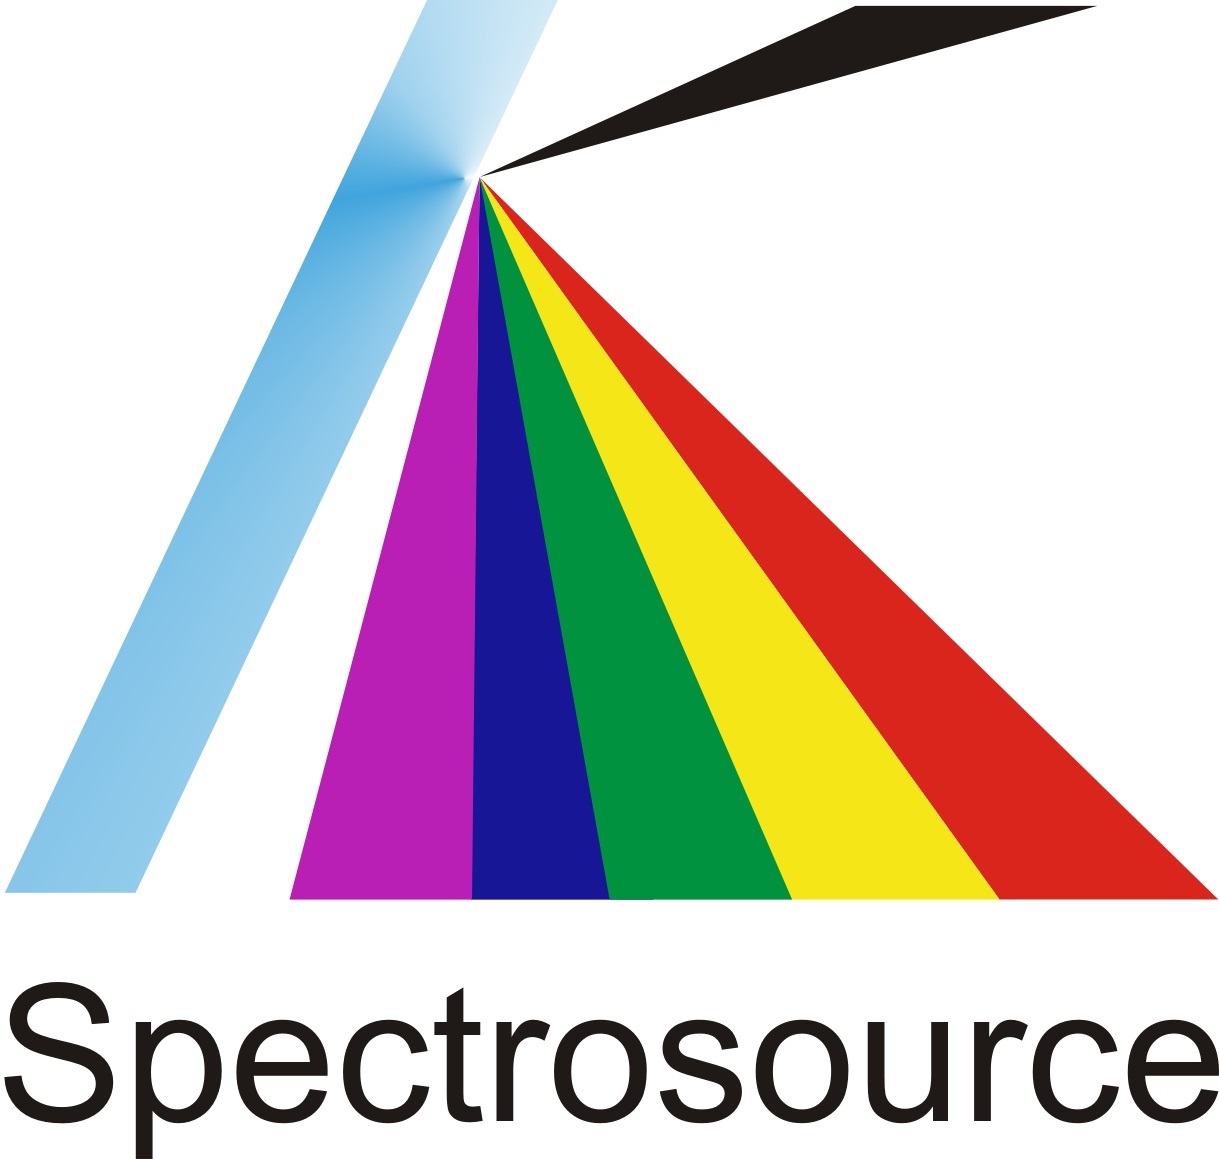 Spectrosource